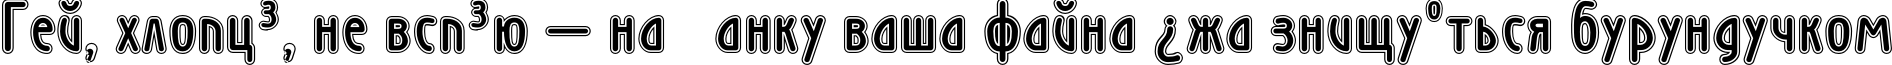 Пример написания шрифтом WienInline текста на украинском